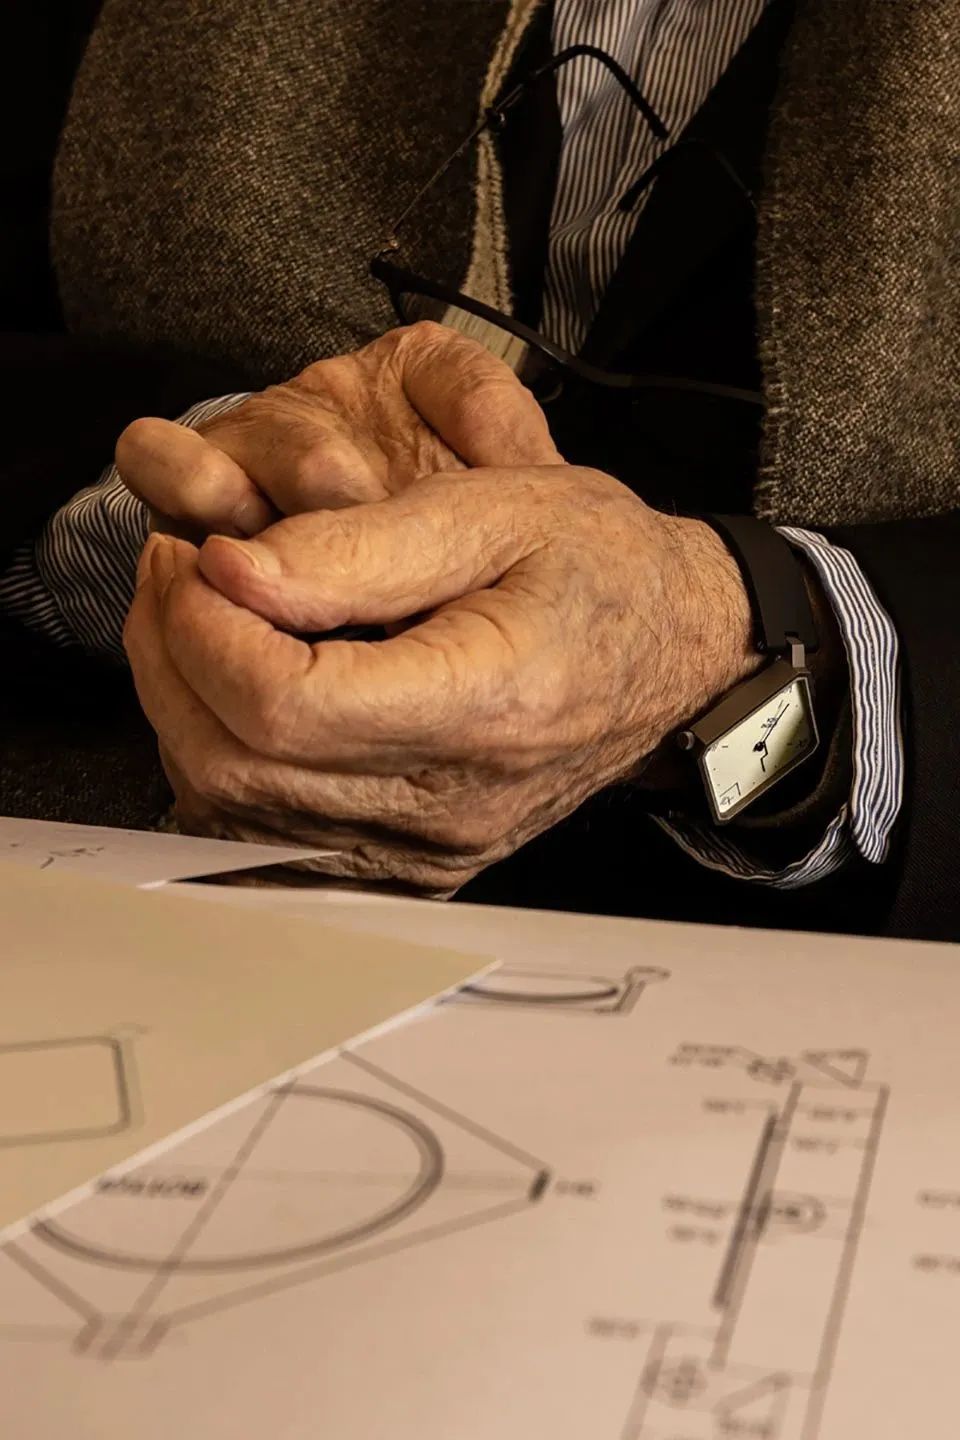 正在繪製「LEBOND SIZA」手稿的Alvaro Siza